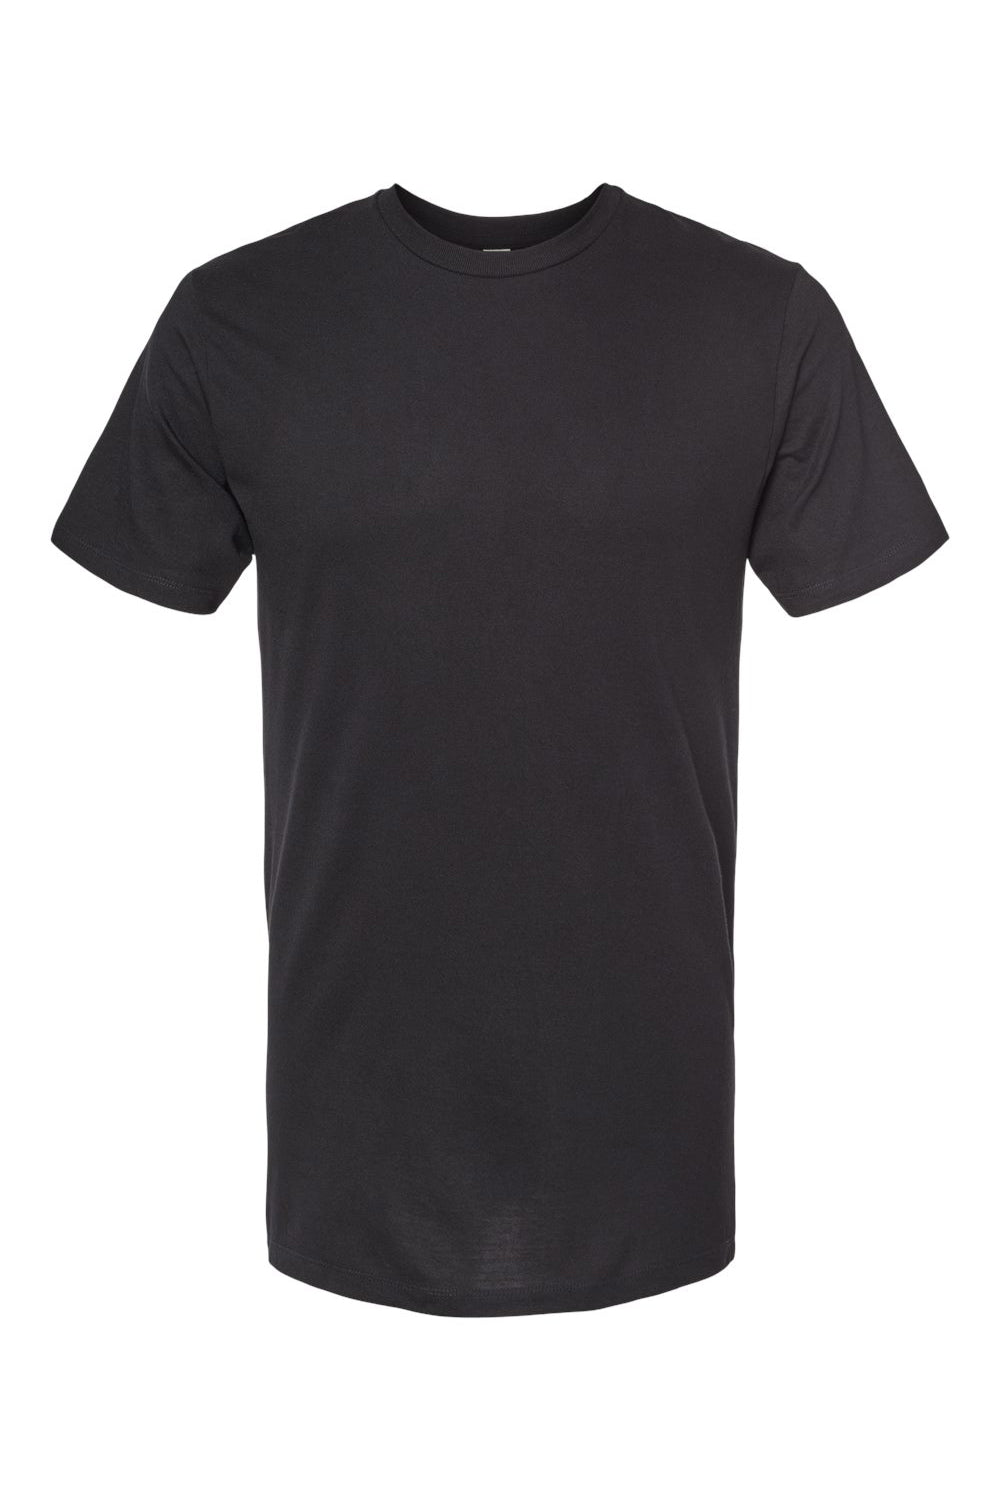 Tultex 541 Mens Premium Short Sleeve Crewneck T-Shirt Black Flat Front